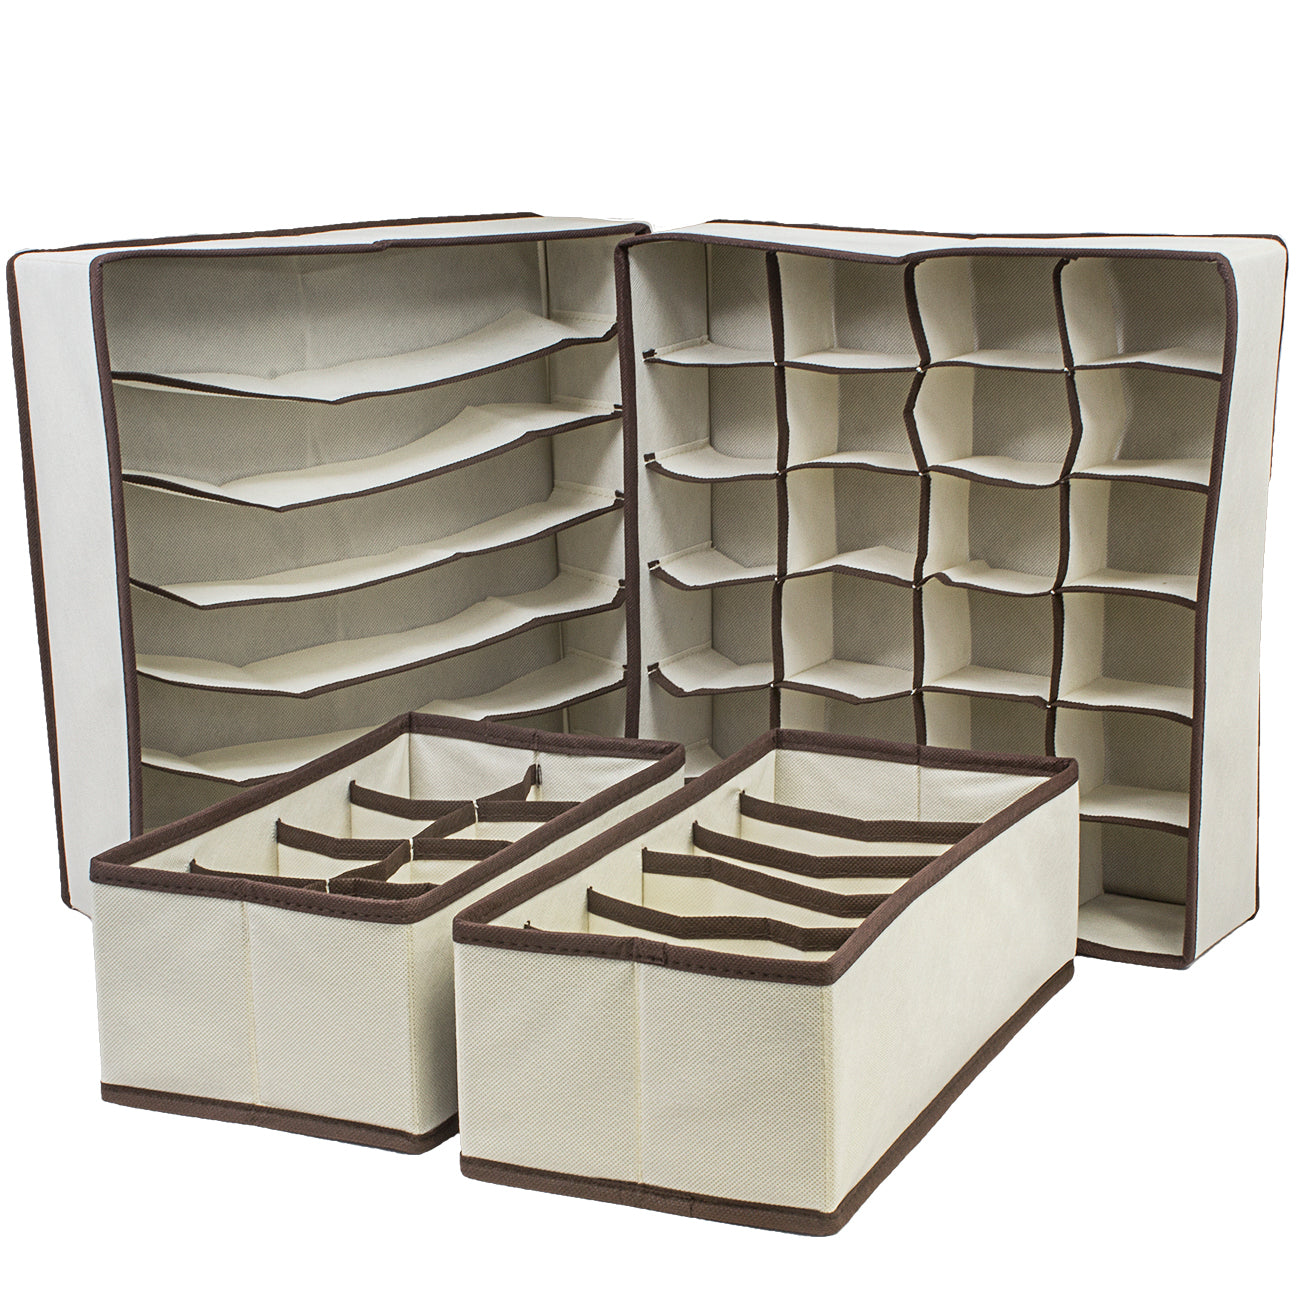 Acrylic Shelf Dividers - 4 Set Sorbus